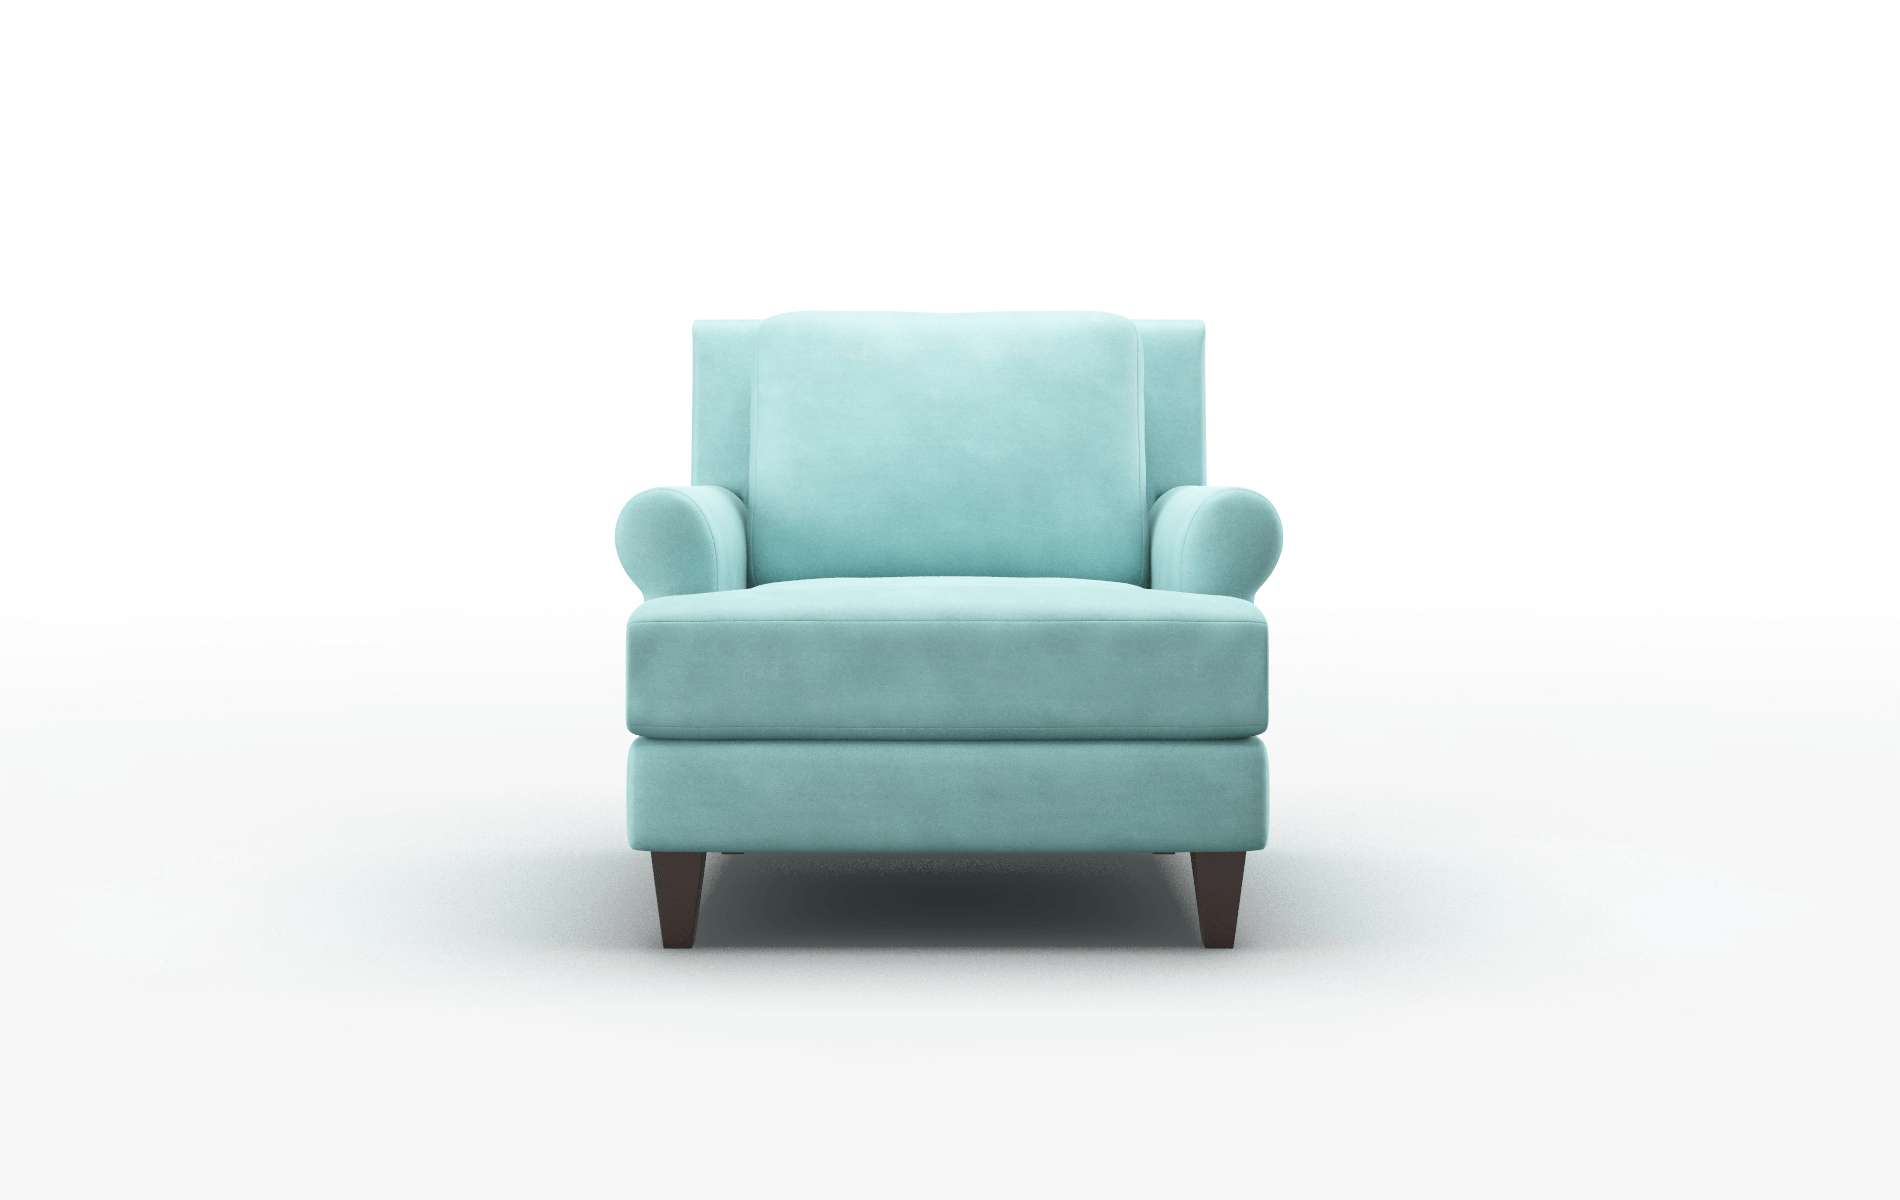 Stockholm Curious Turquoise Chair espresso legs 1